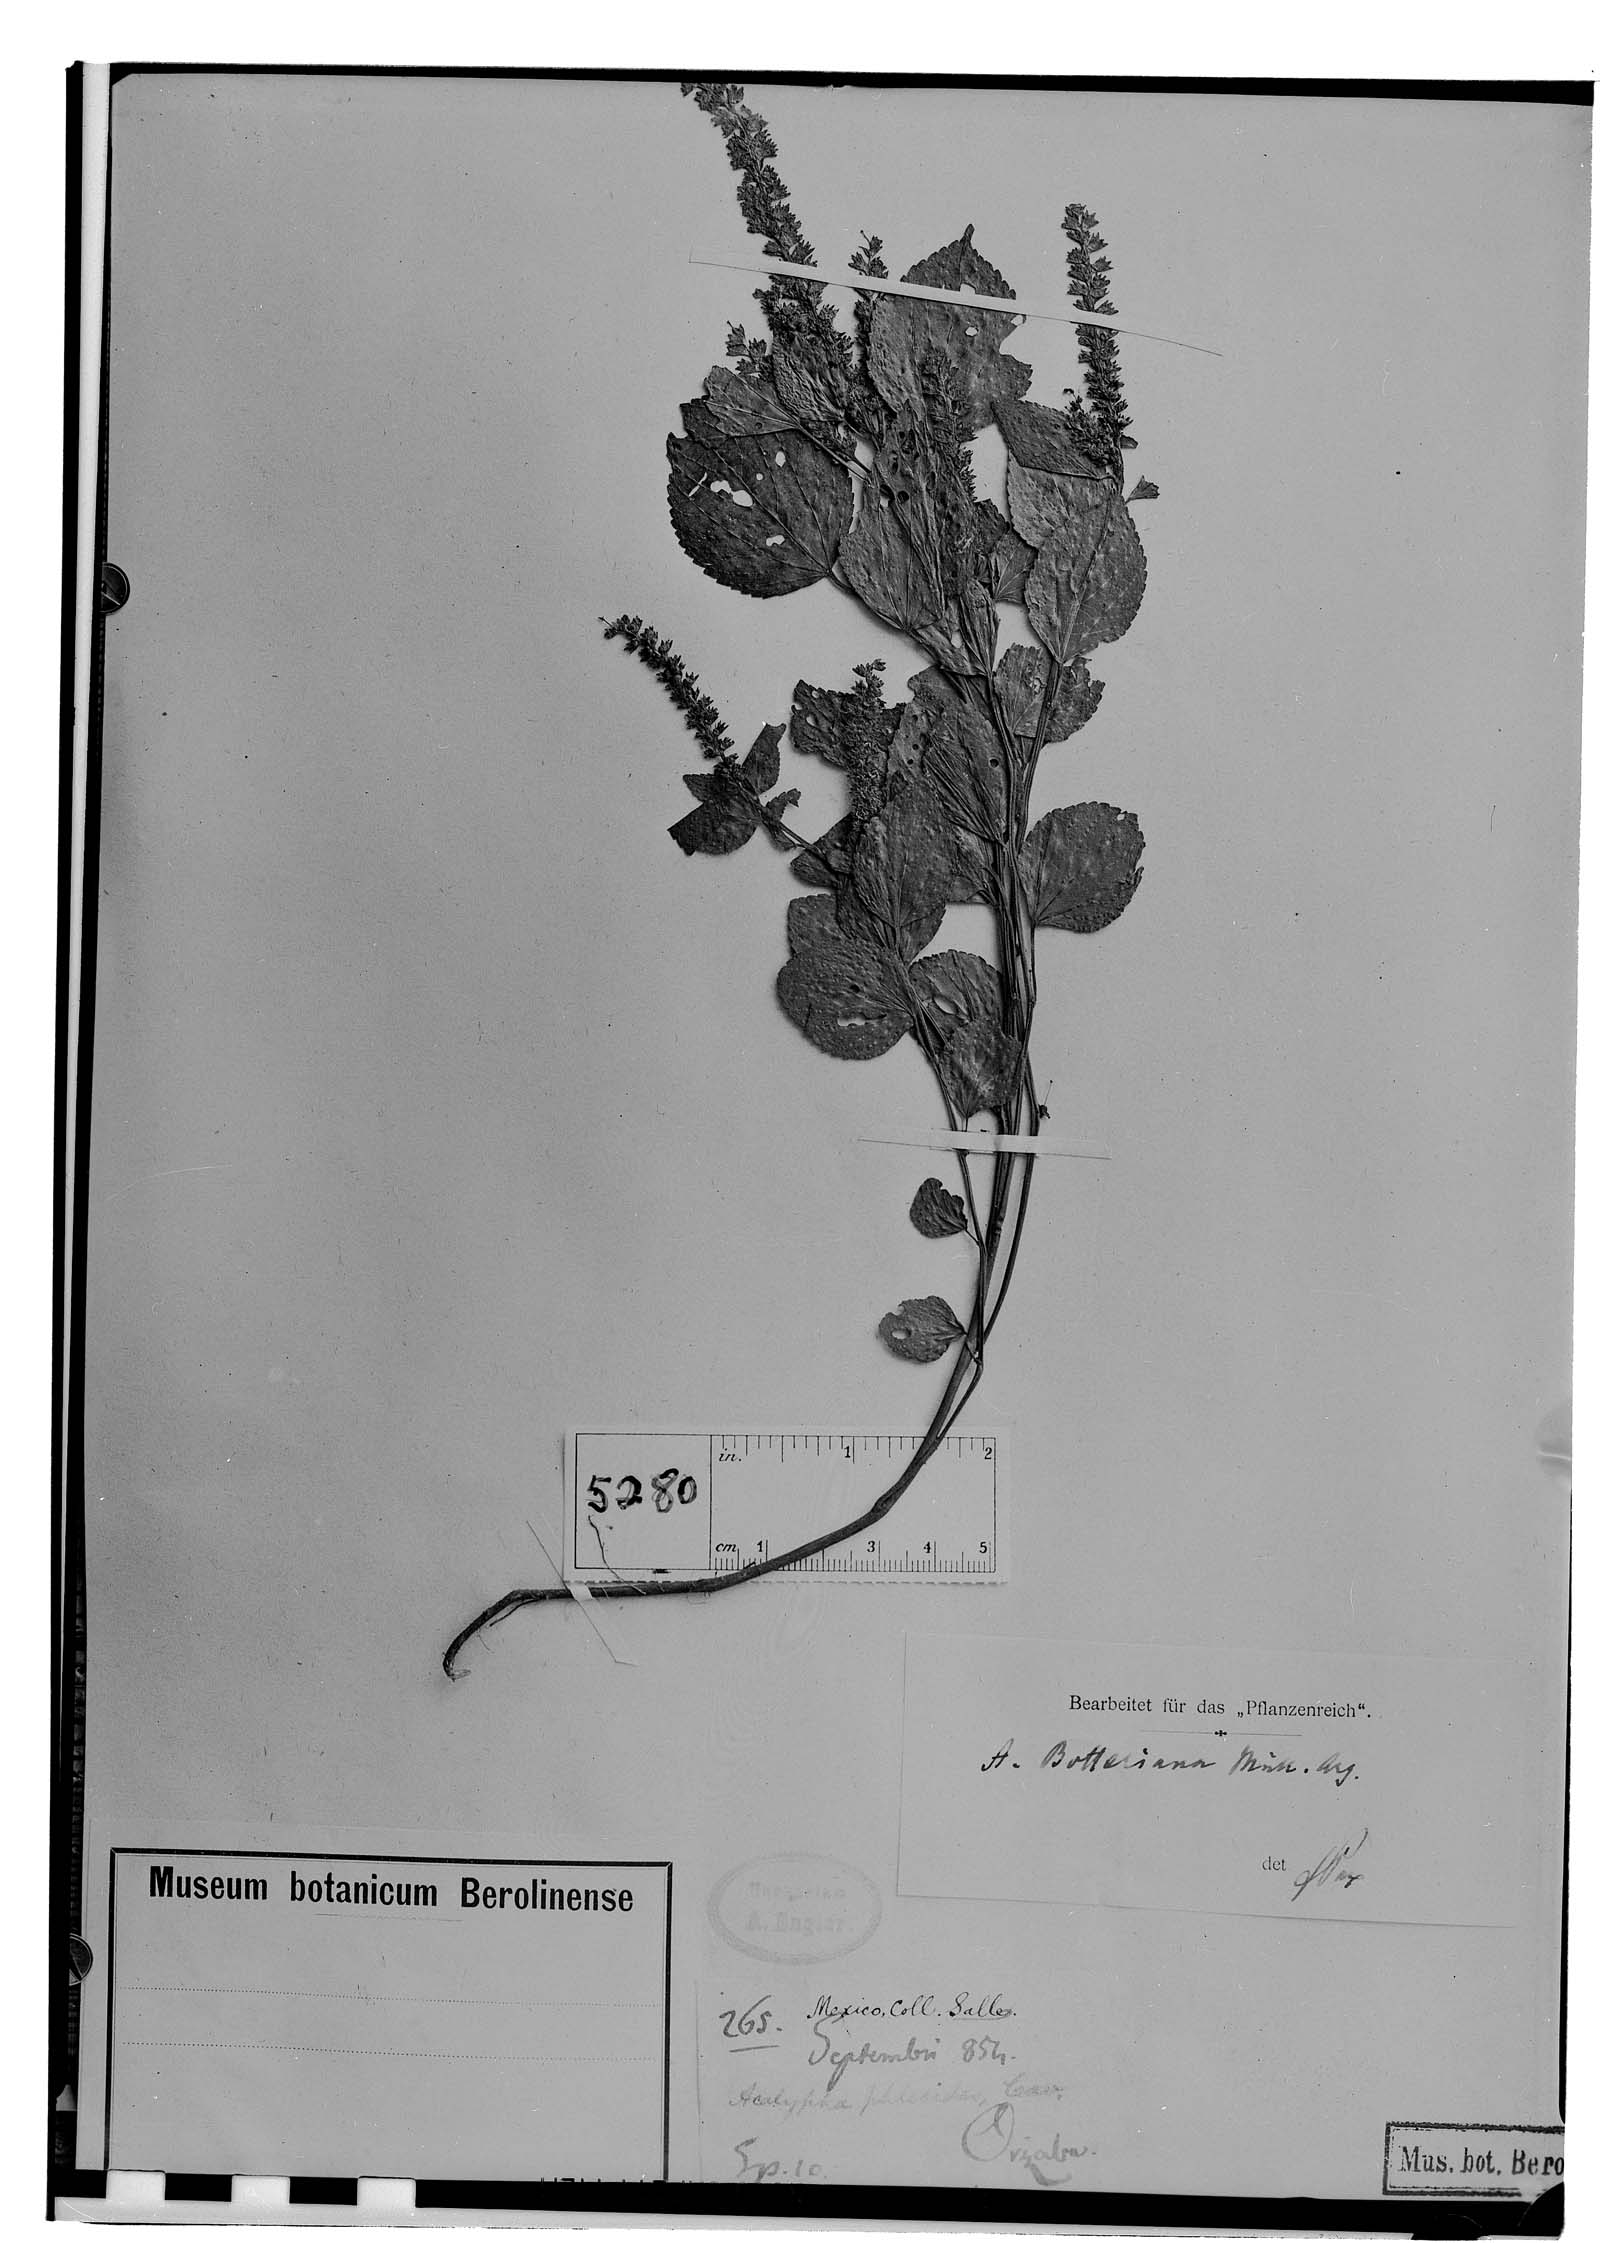 Acalypha botteriana image